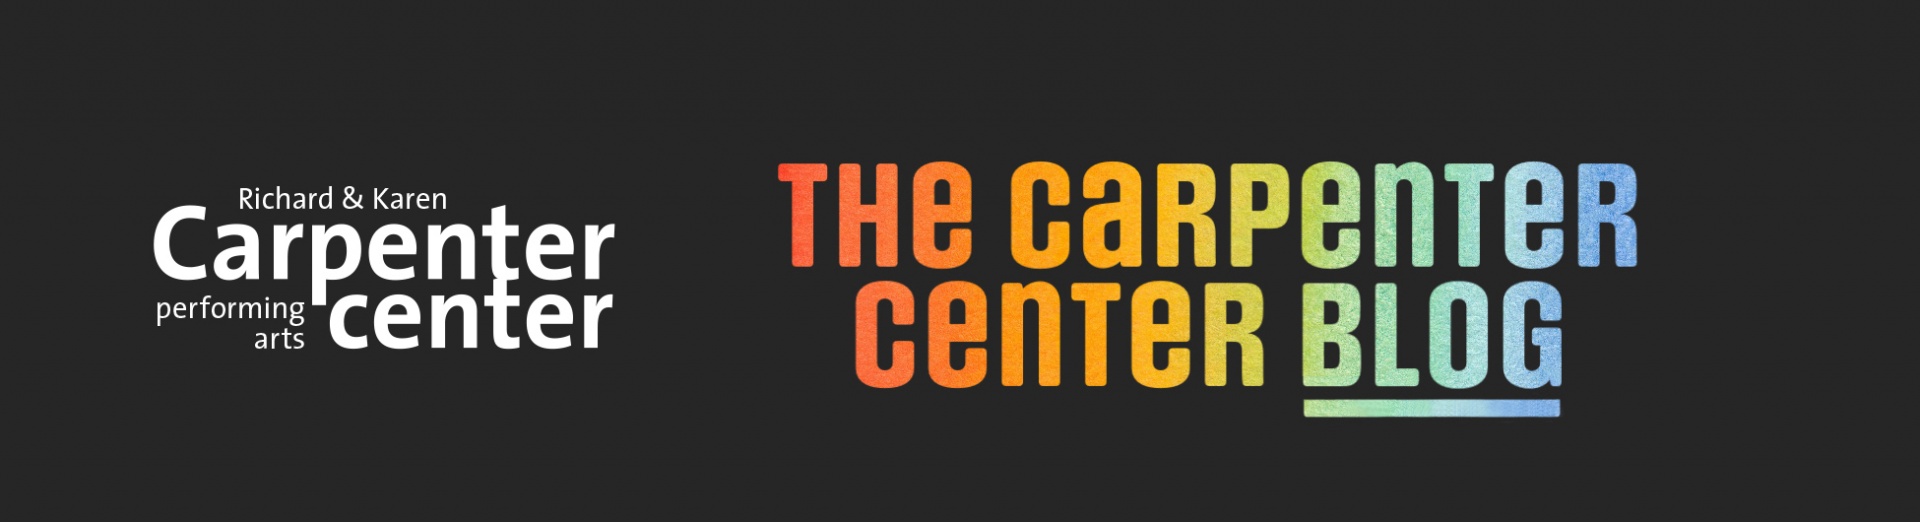 The Carpenter Center Blog